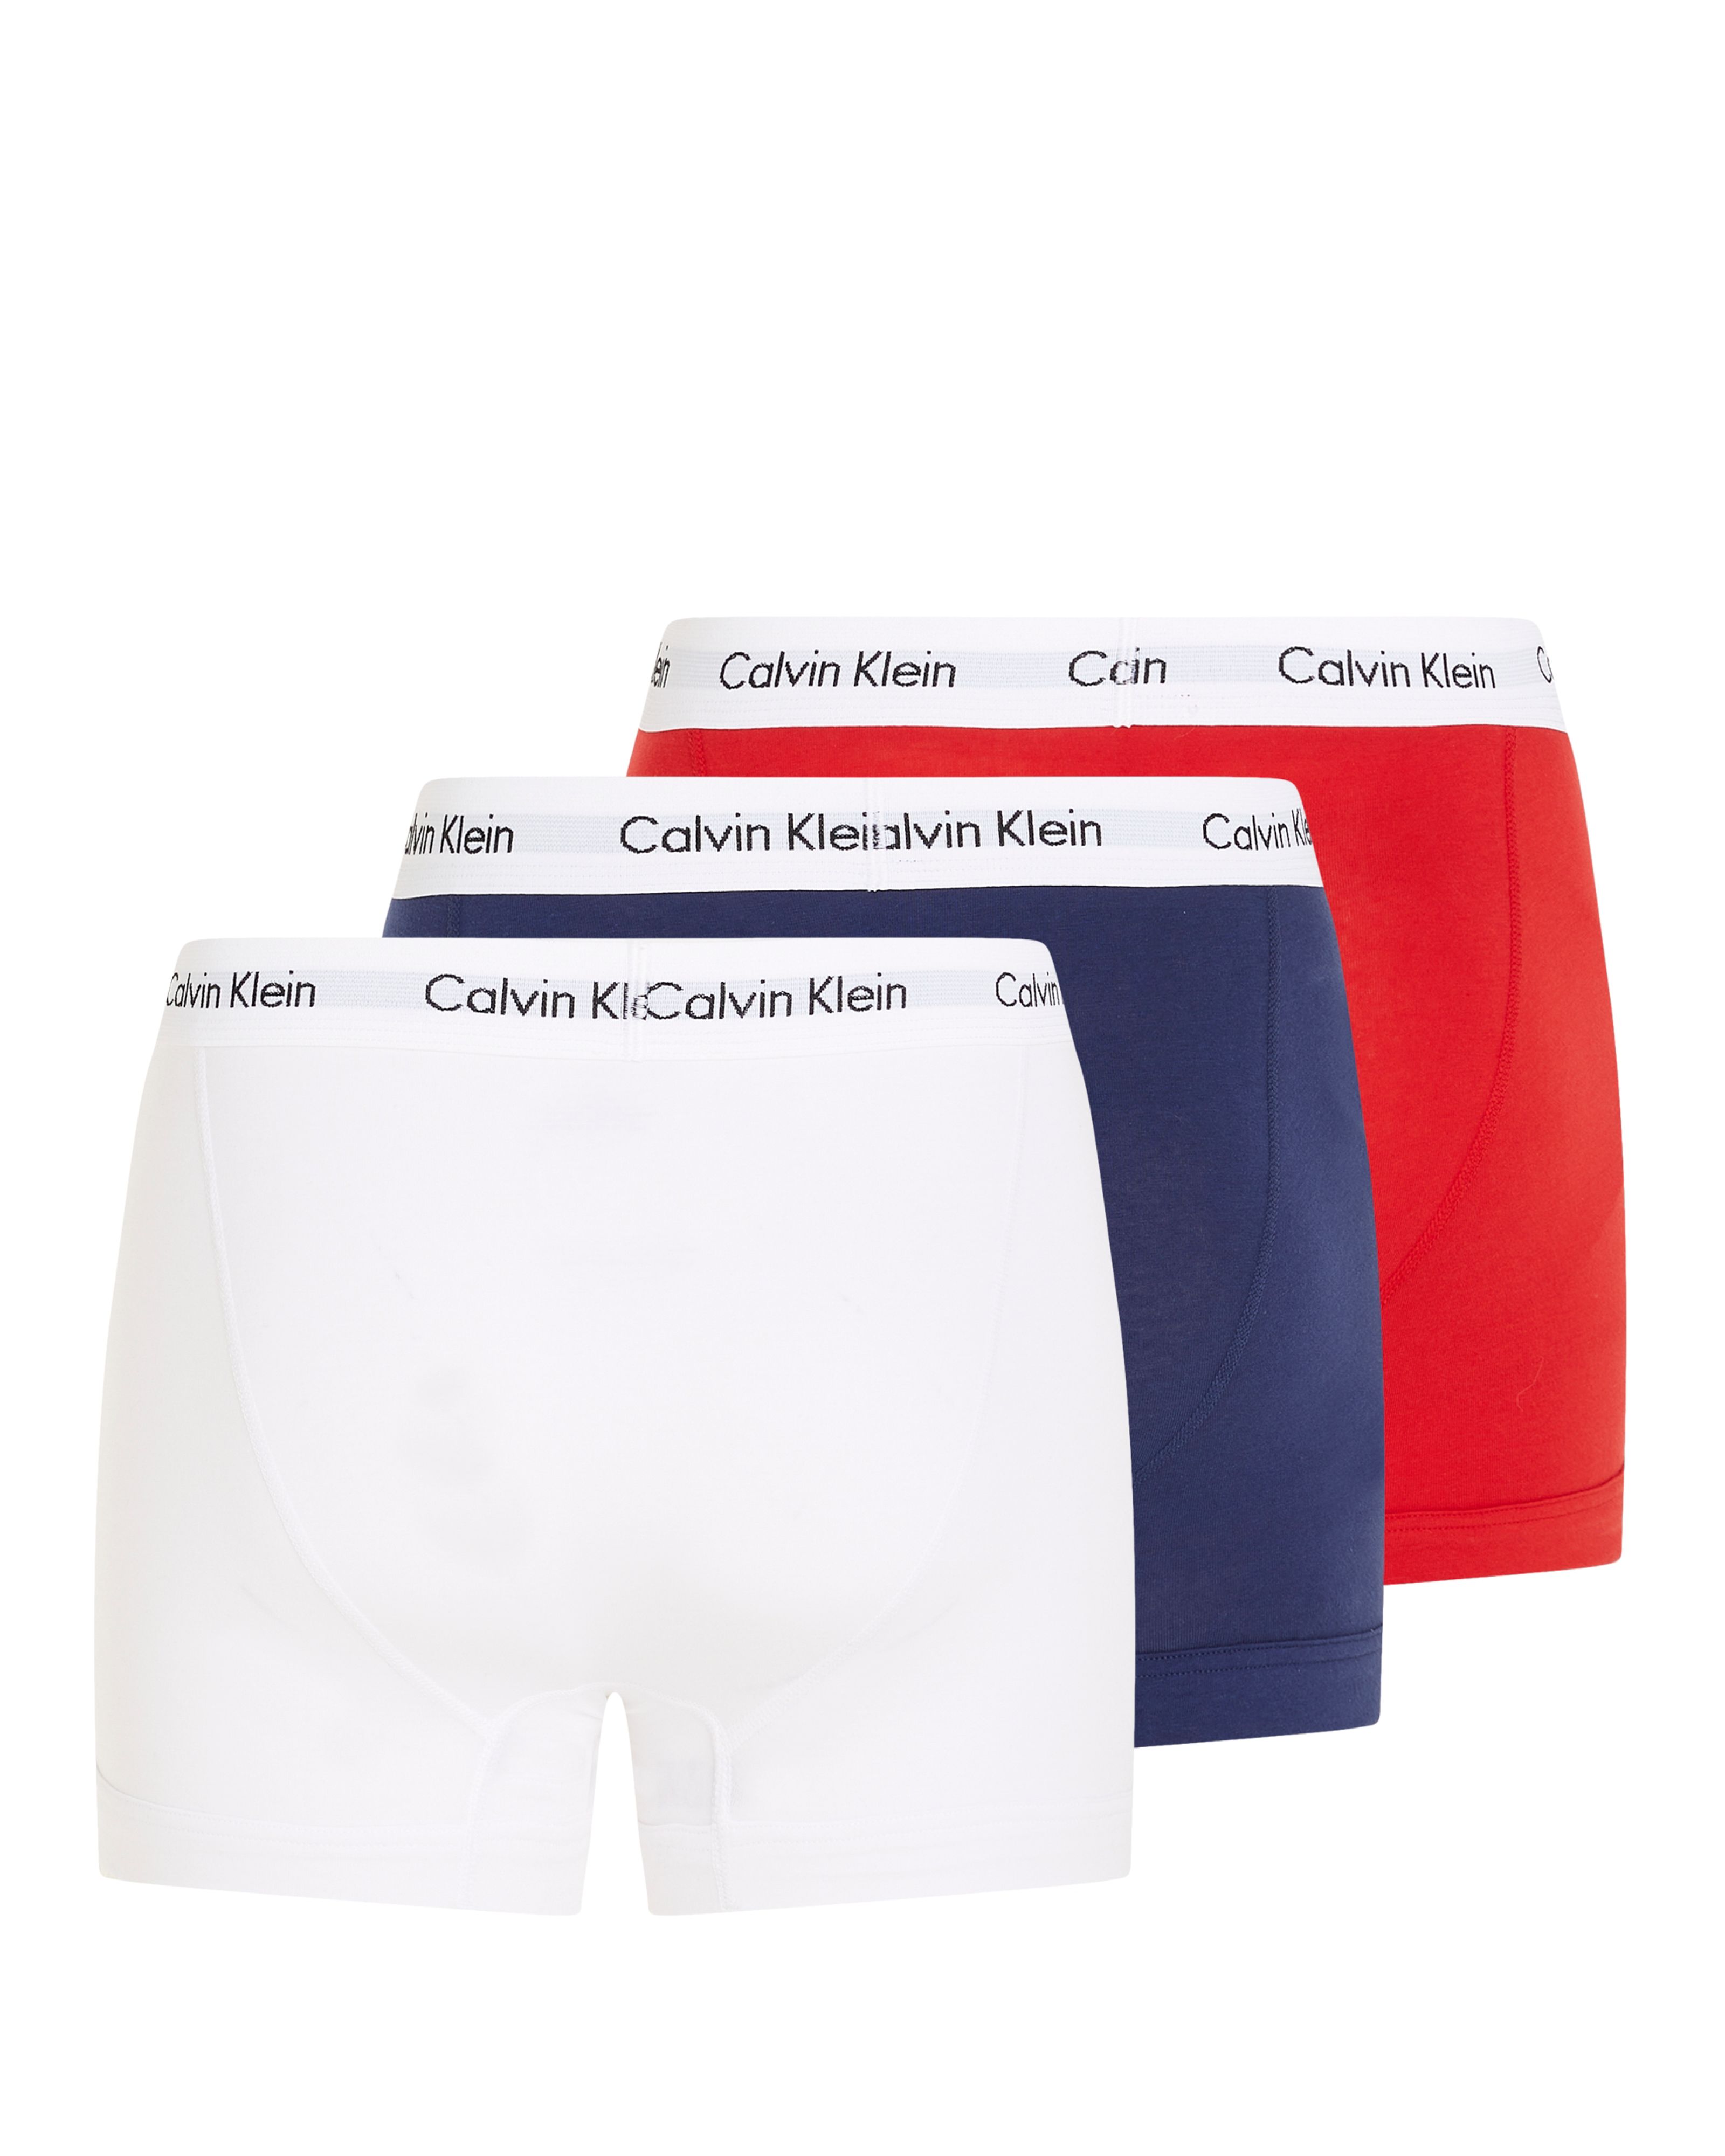 Calvin Klein Menswear Boxershort 3-pack Multicolor 021775-90-L